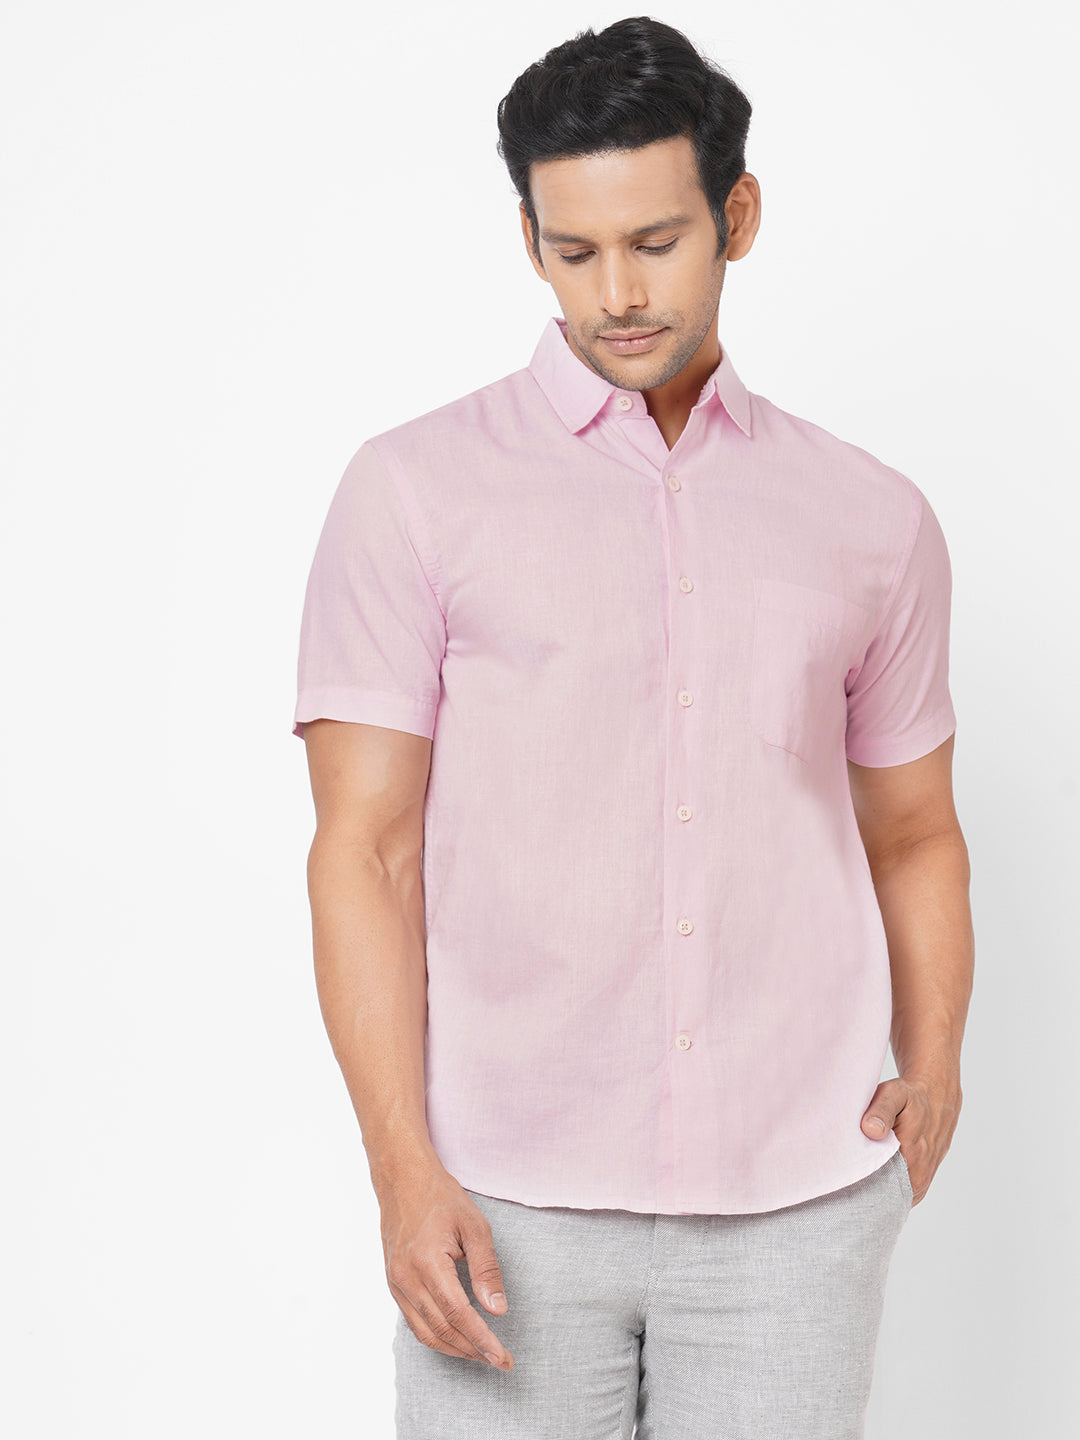 Pink Shirts, Men's Casual & Business Shirts